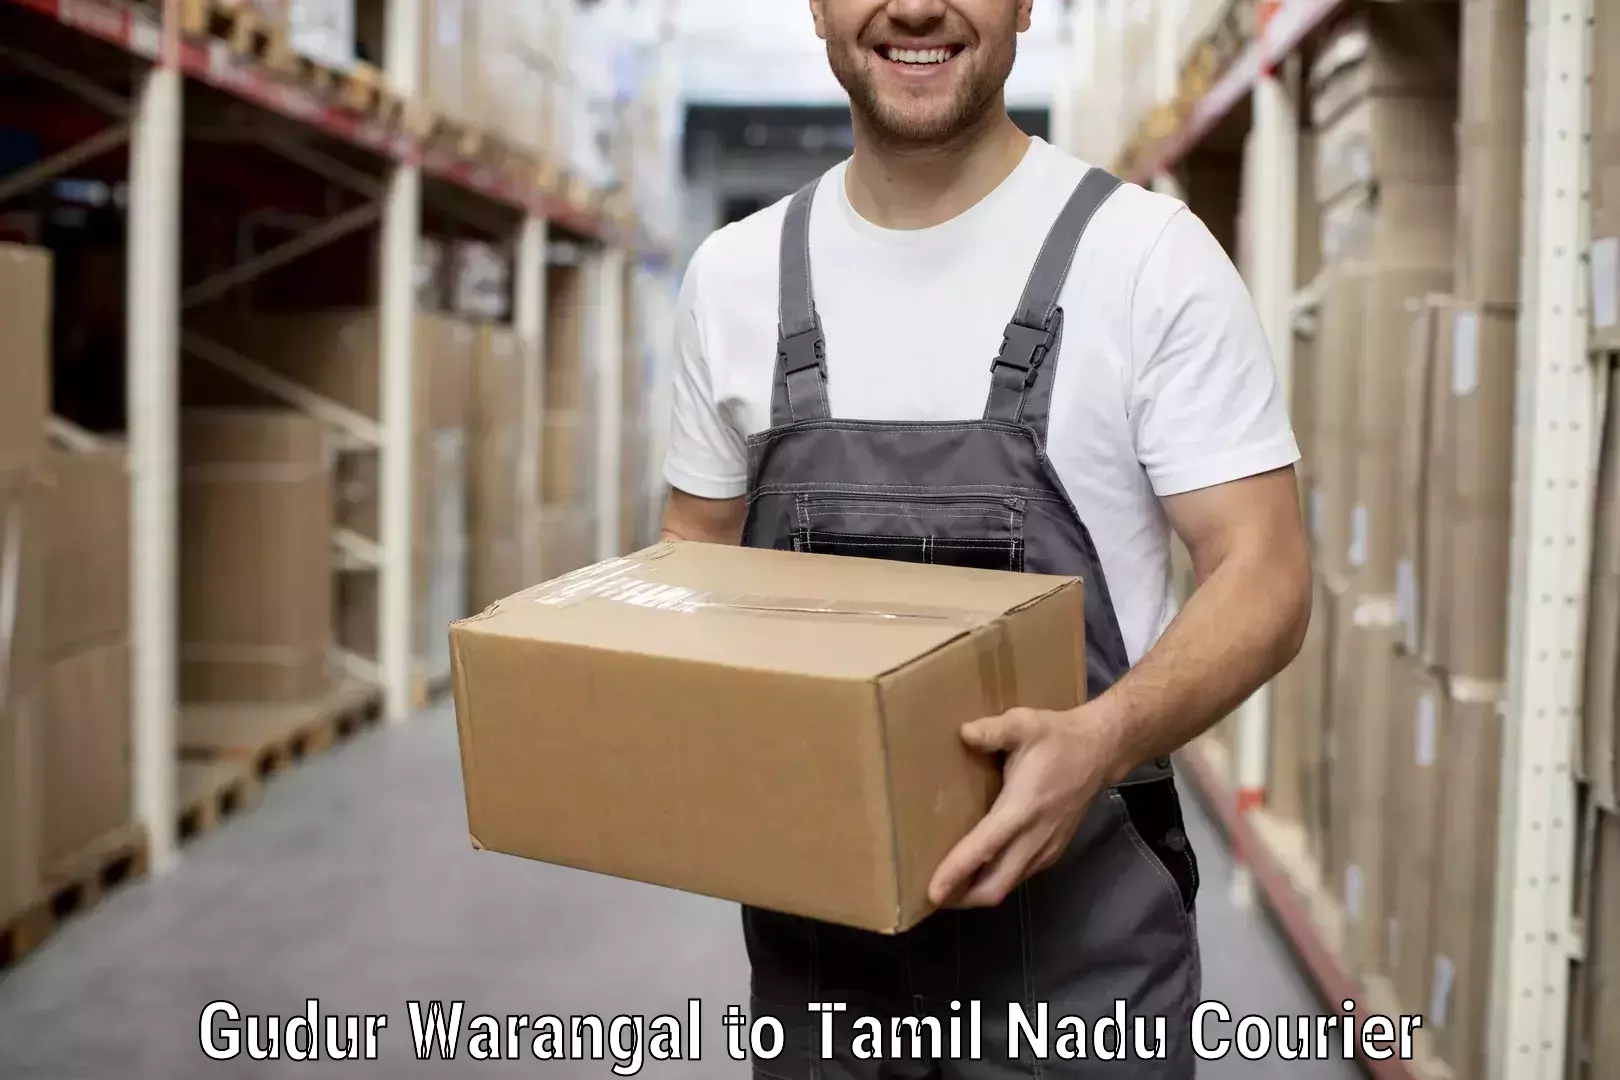 Professional moving company Gudur Warangal to Chennai